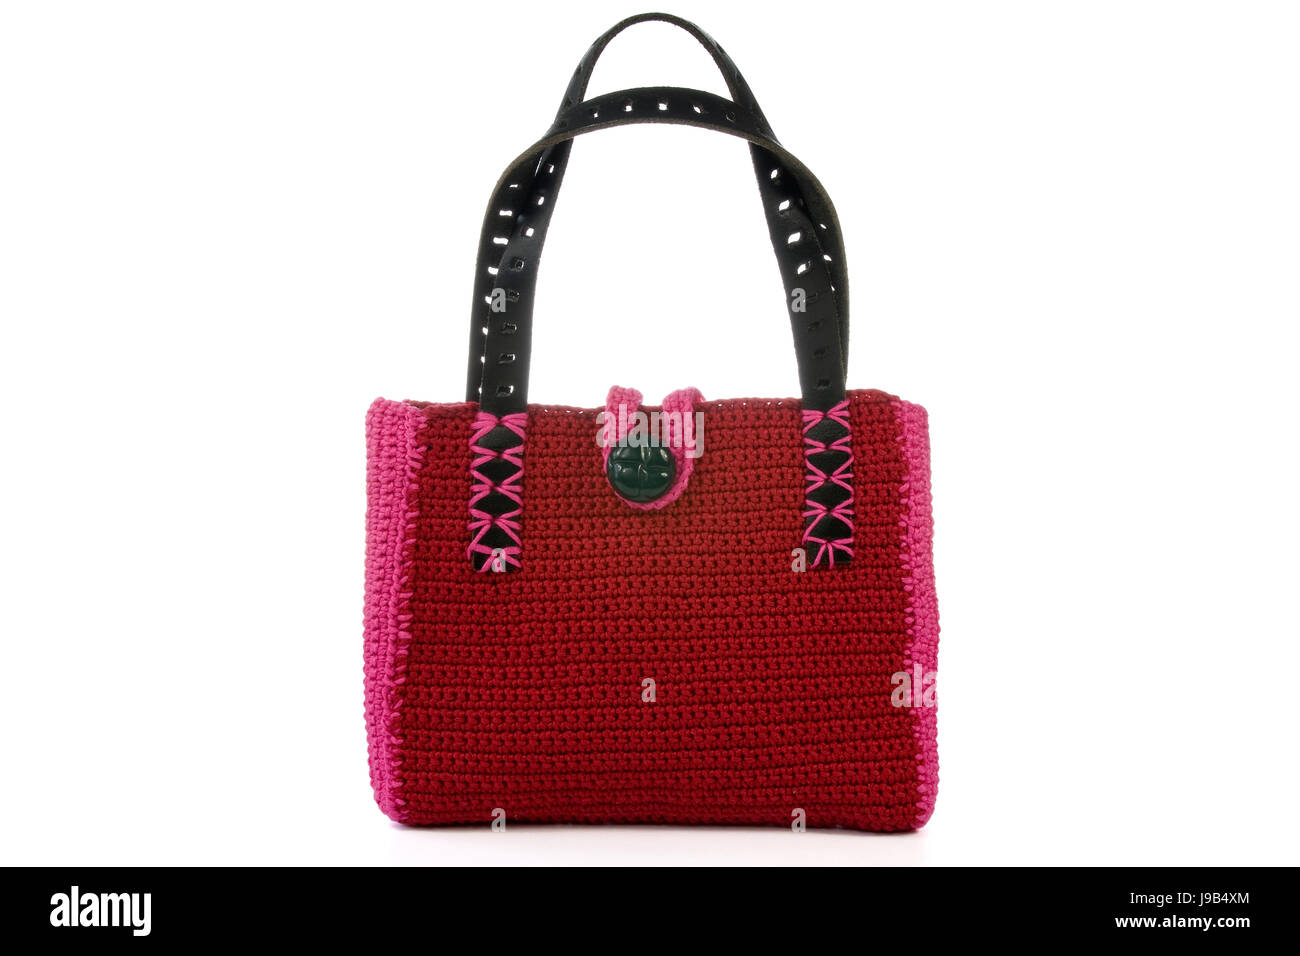 handbag, fashion, accessories, accessory, cotton, knitted, red, bag, handbag, Stock Photo